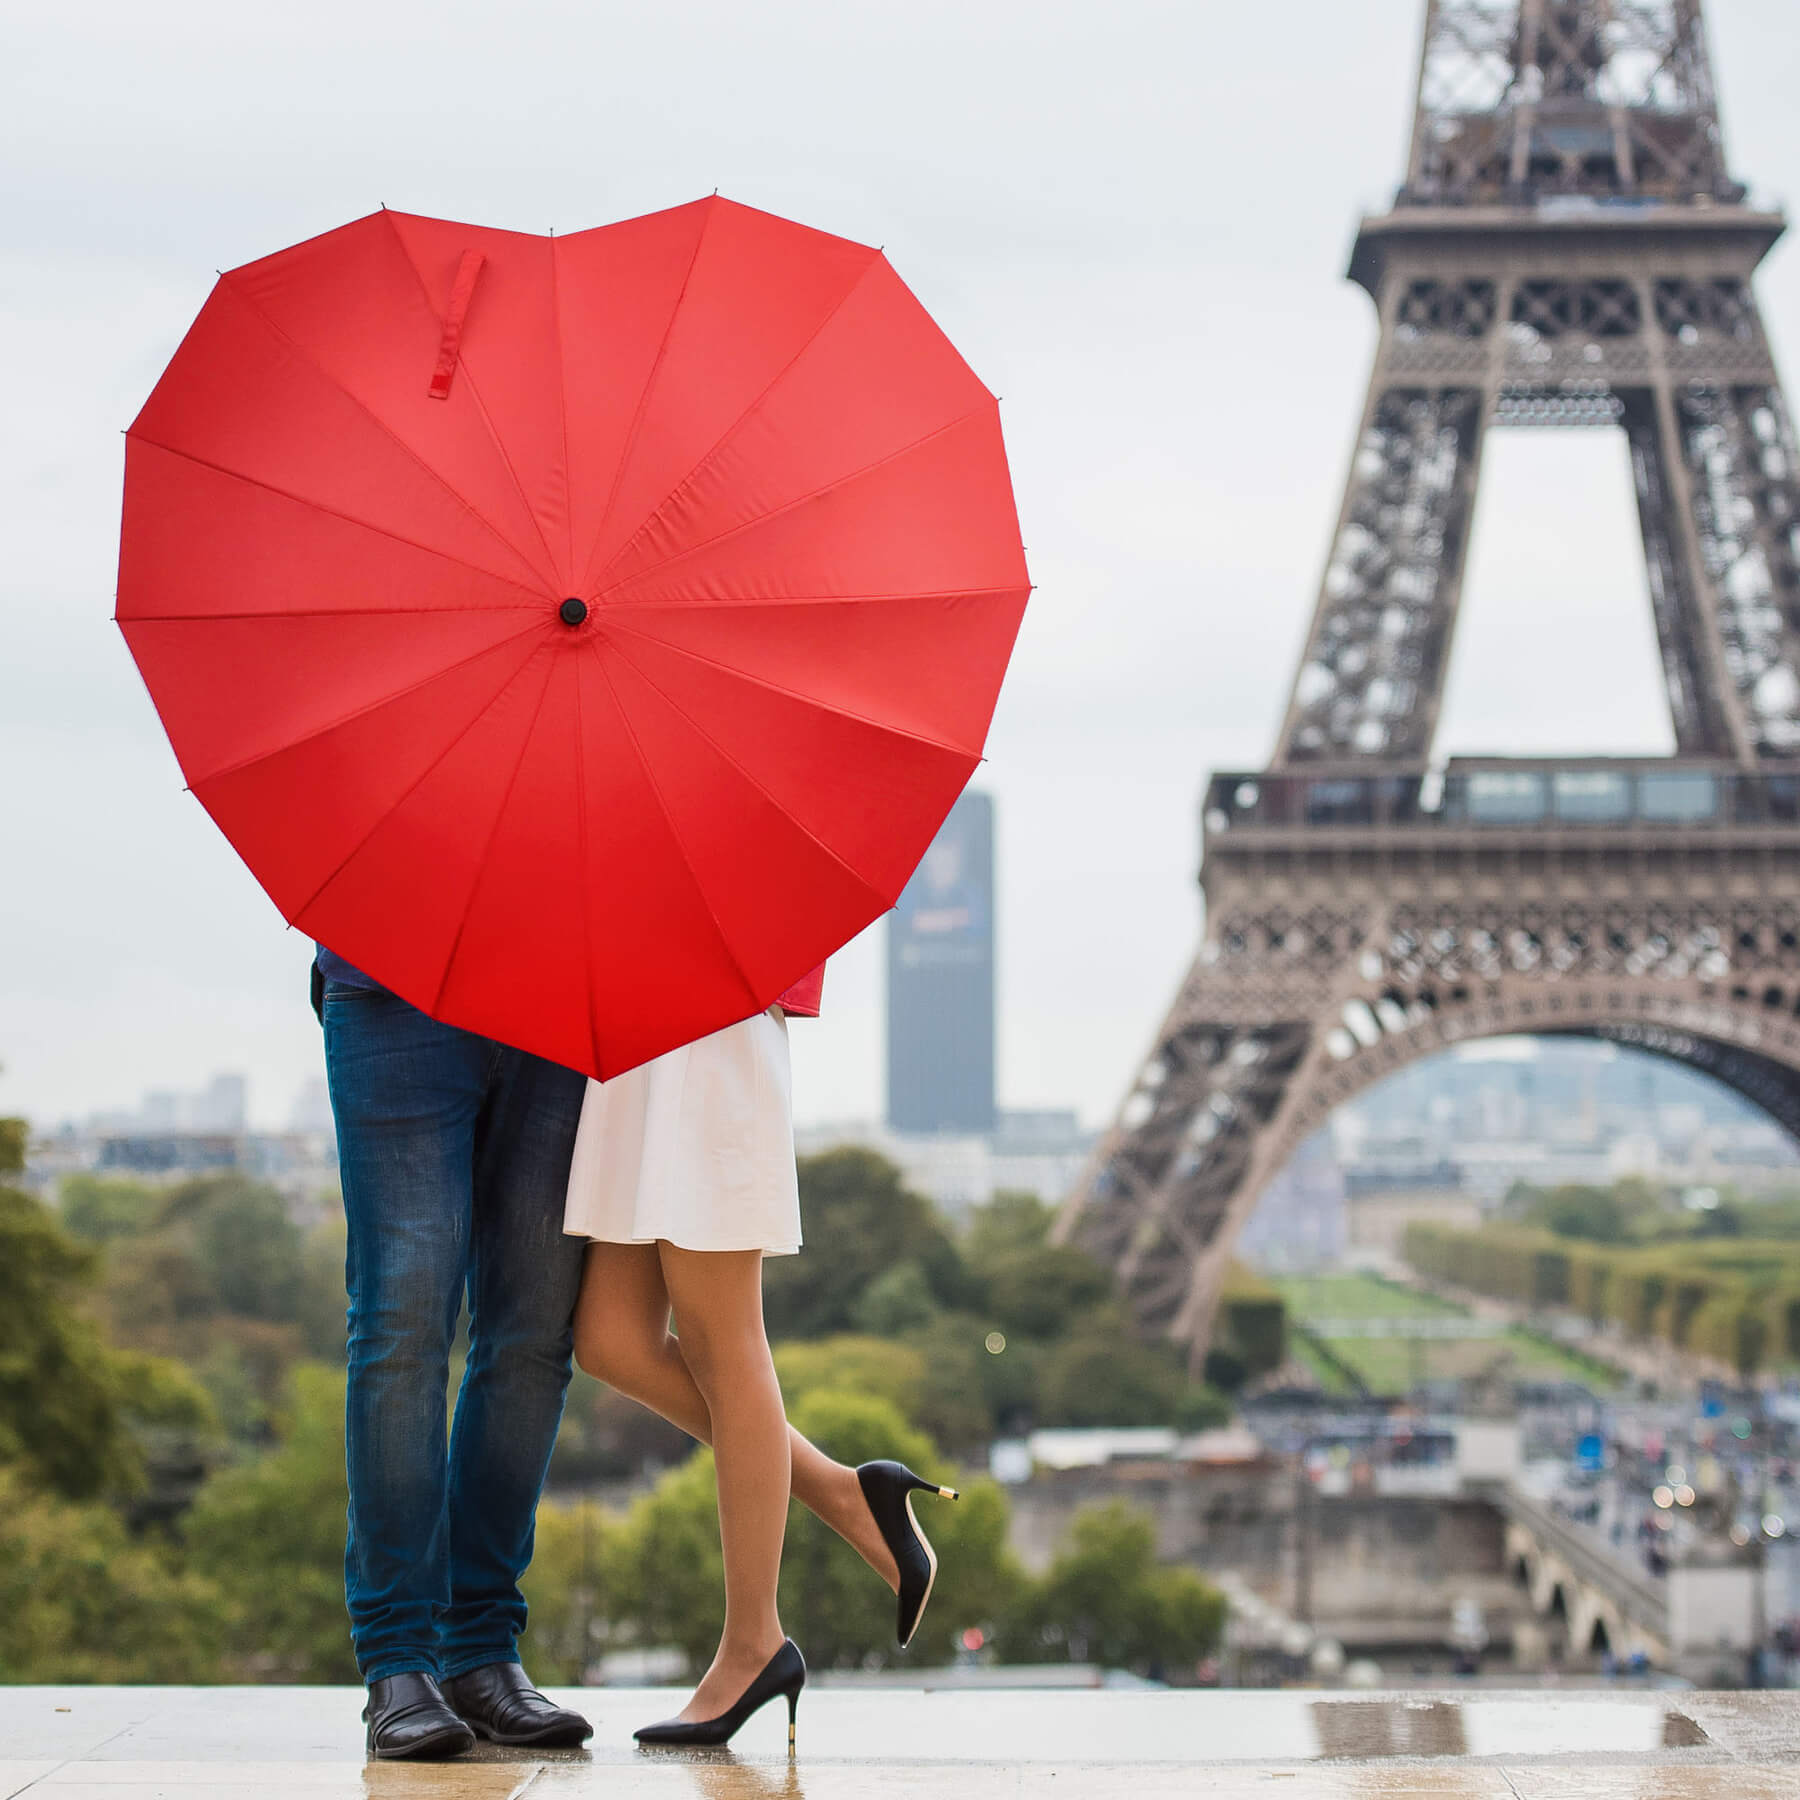 couple-behind-red-heart-shaped-umbrella-eiffel-tower-paris.jpg